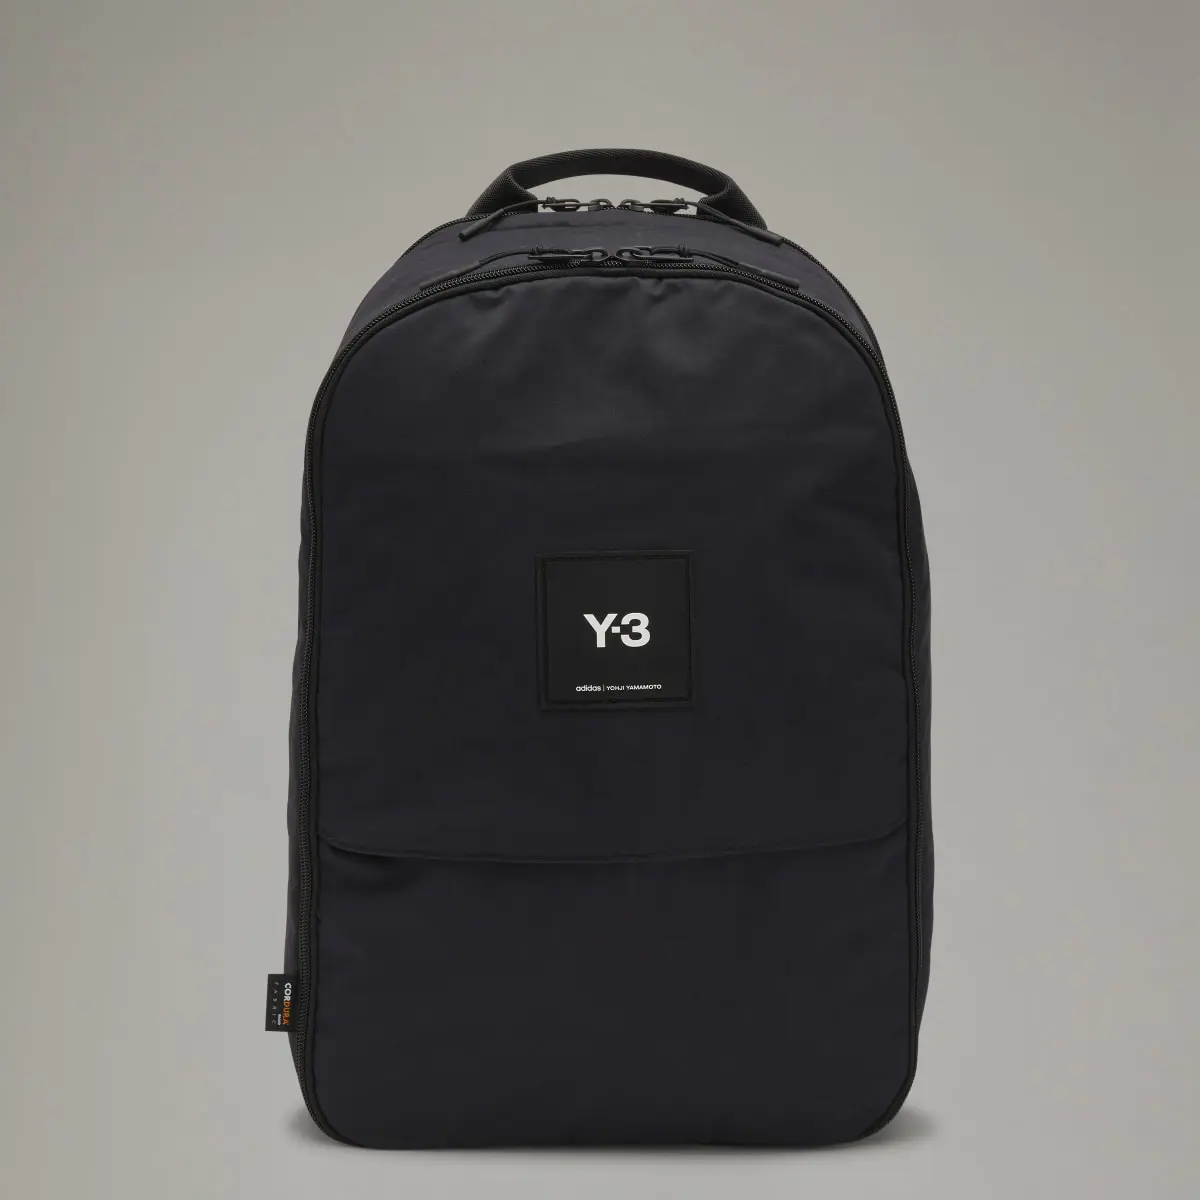 Adidas Y-3 Tech Backpack. 1